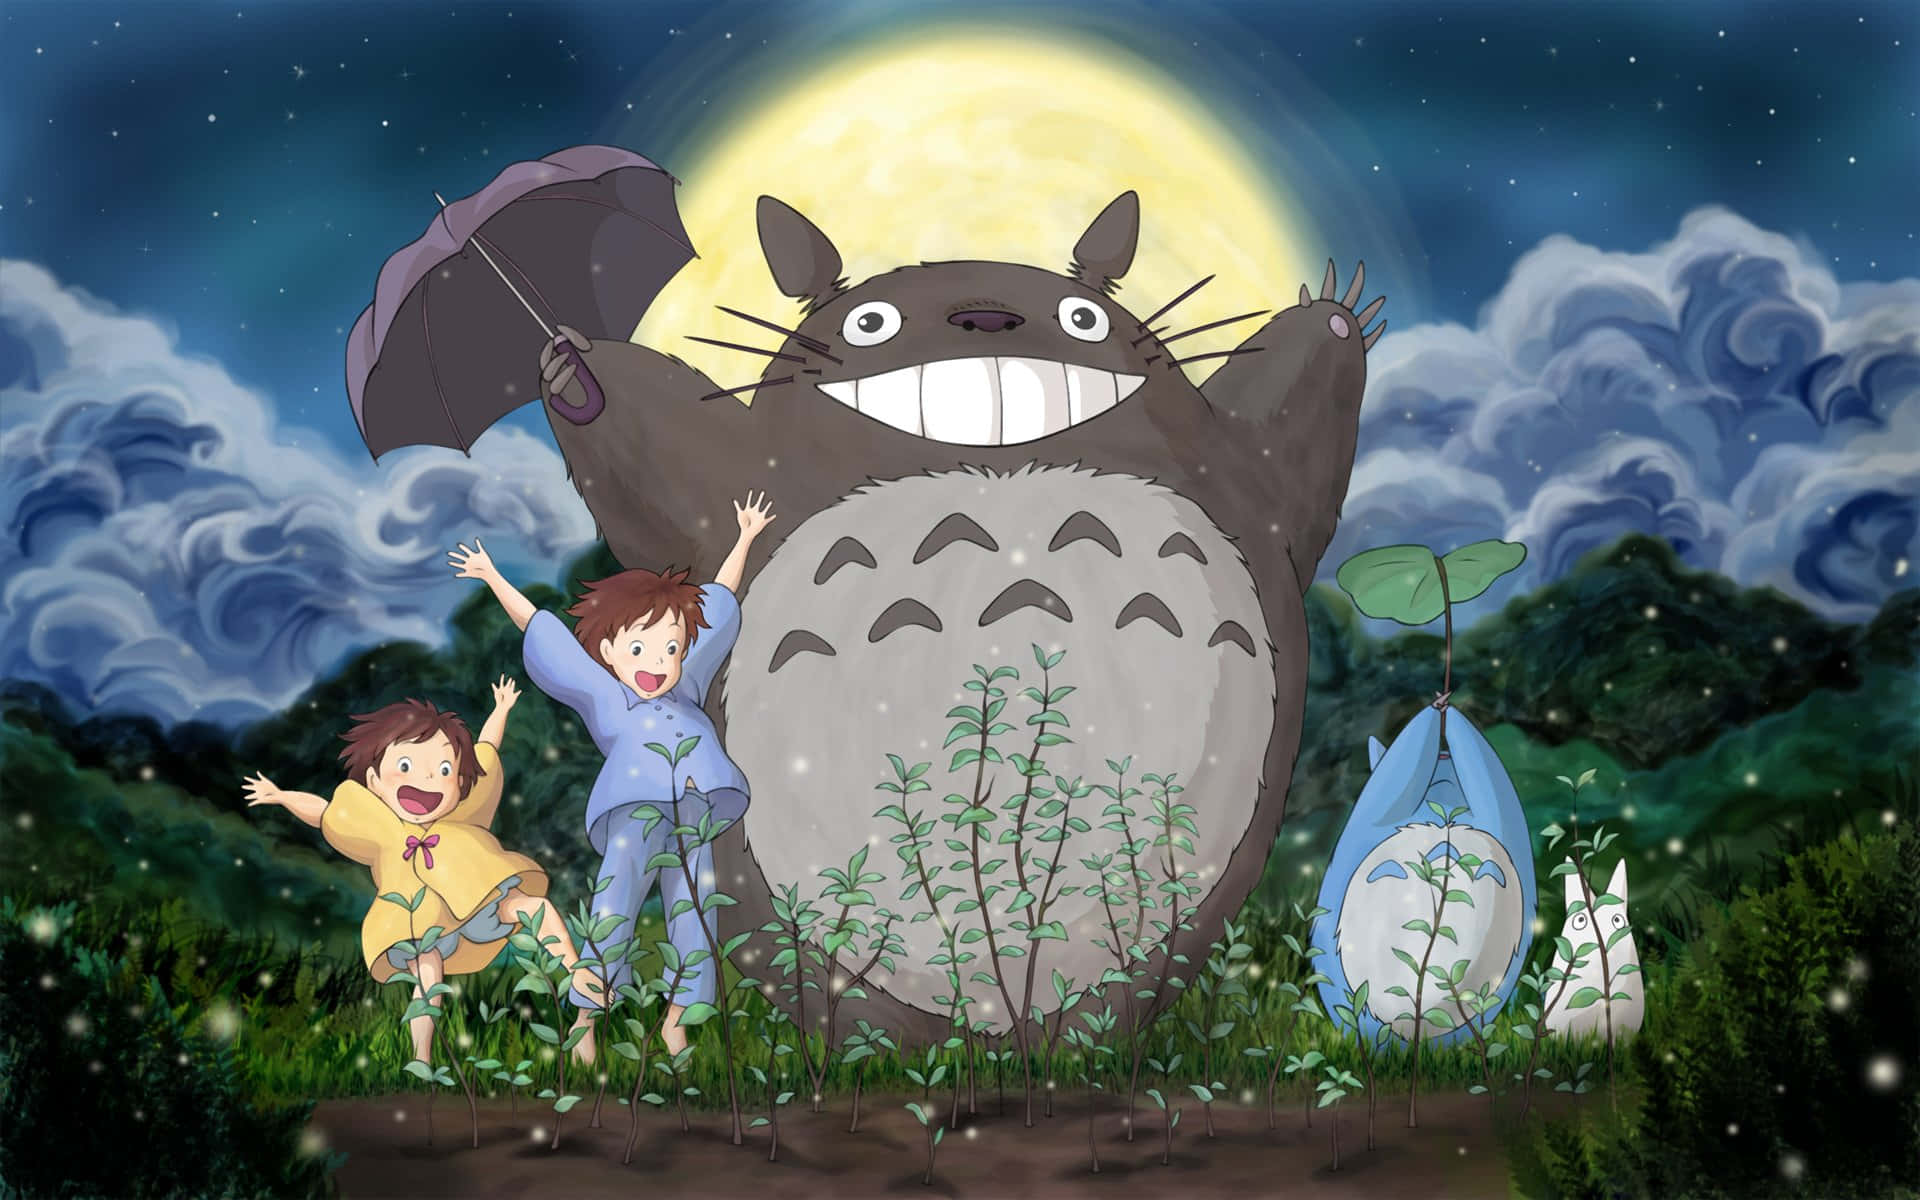 Totoro Design Wallpapers